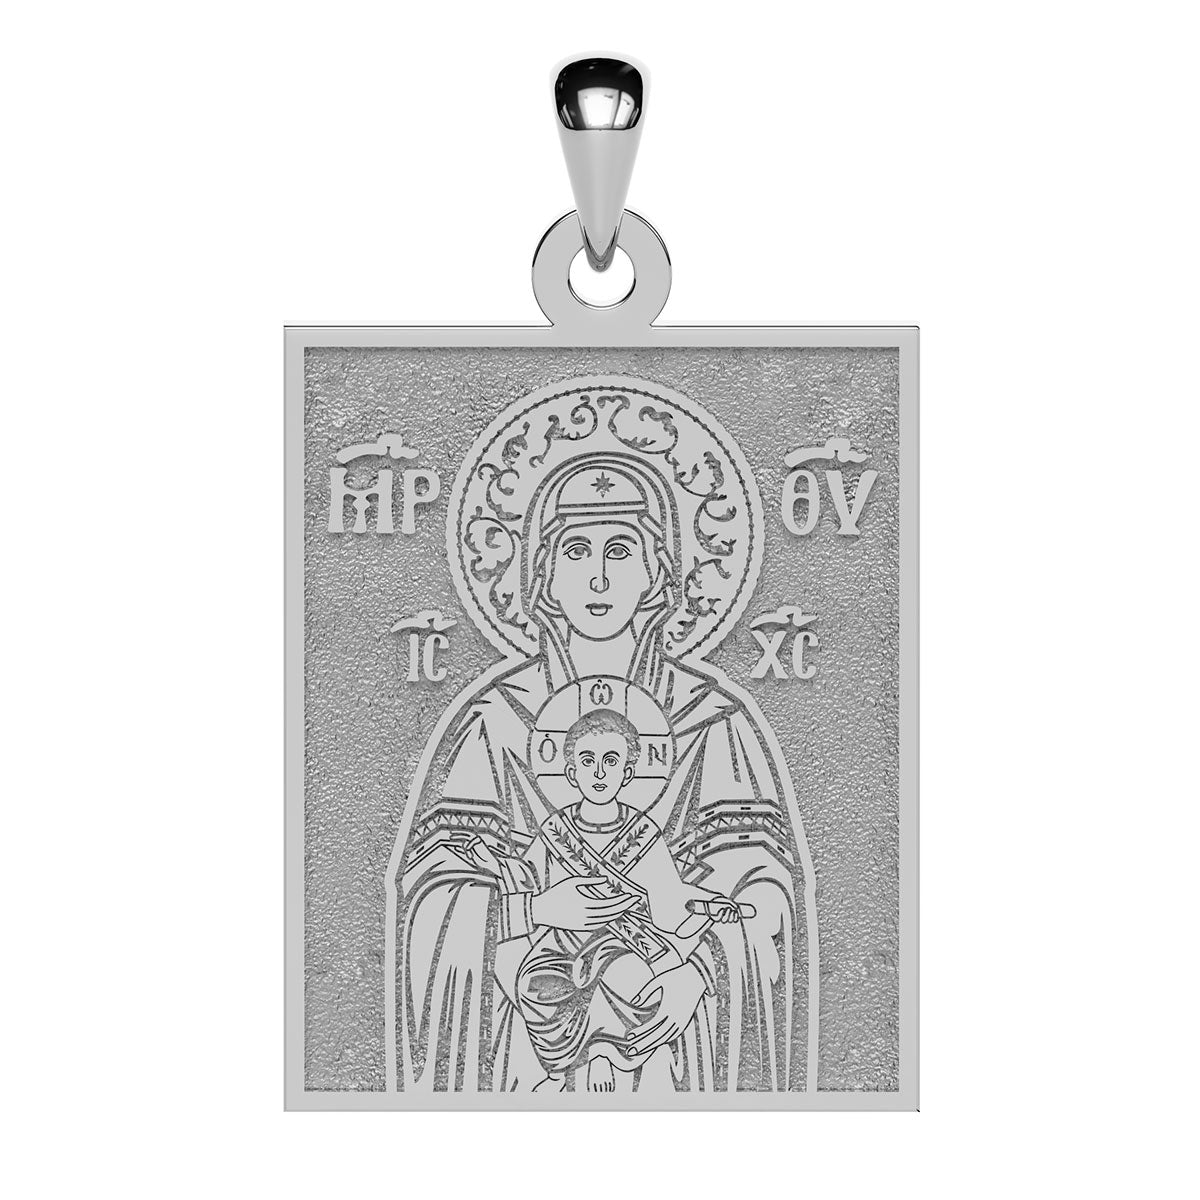 Virgin Mary Panagia Theotokos Greek Orthodox Icon Tag Medal